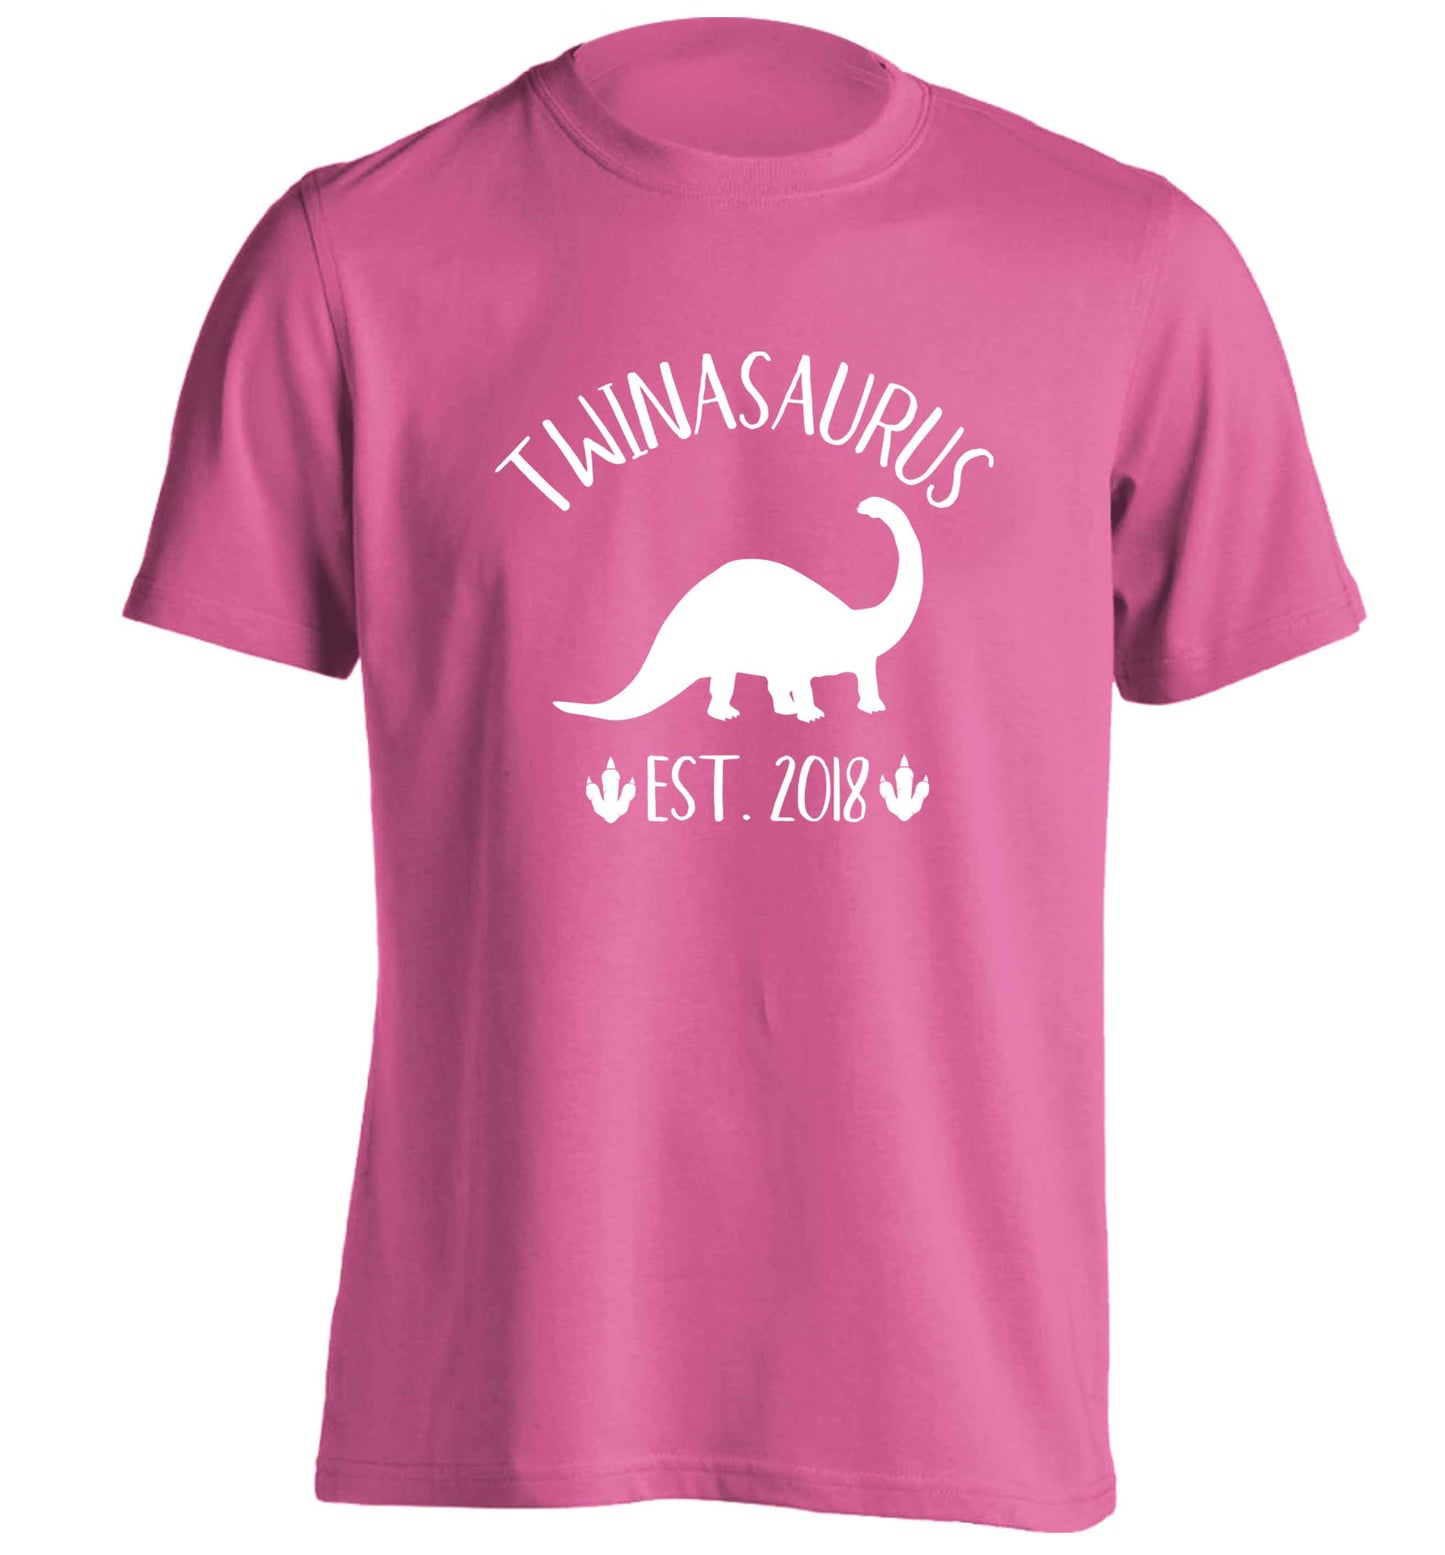 Personalised twinasaurus since (custom date) adults unisex pink Tshirt 2XL